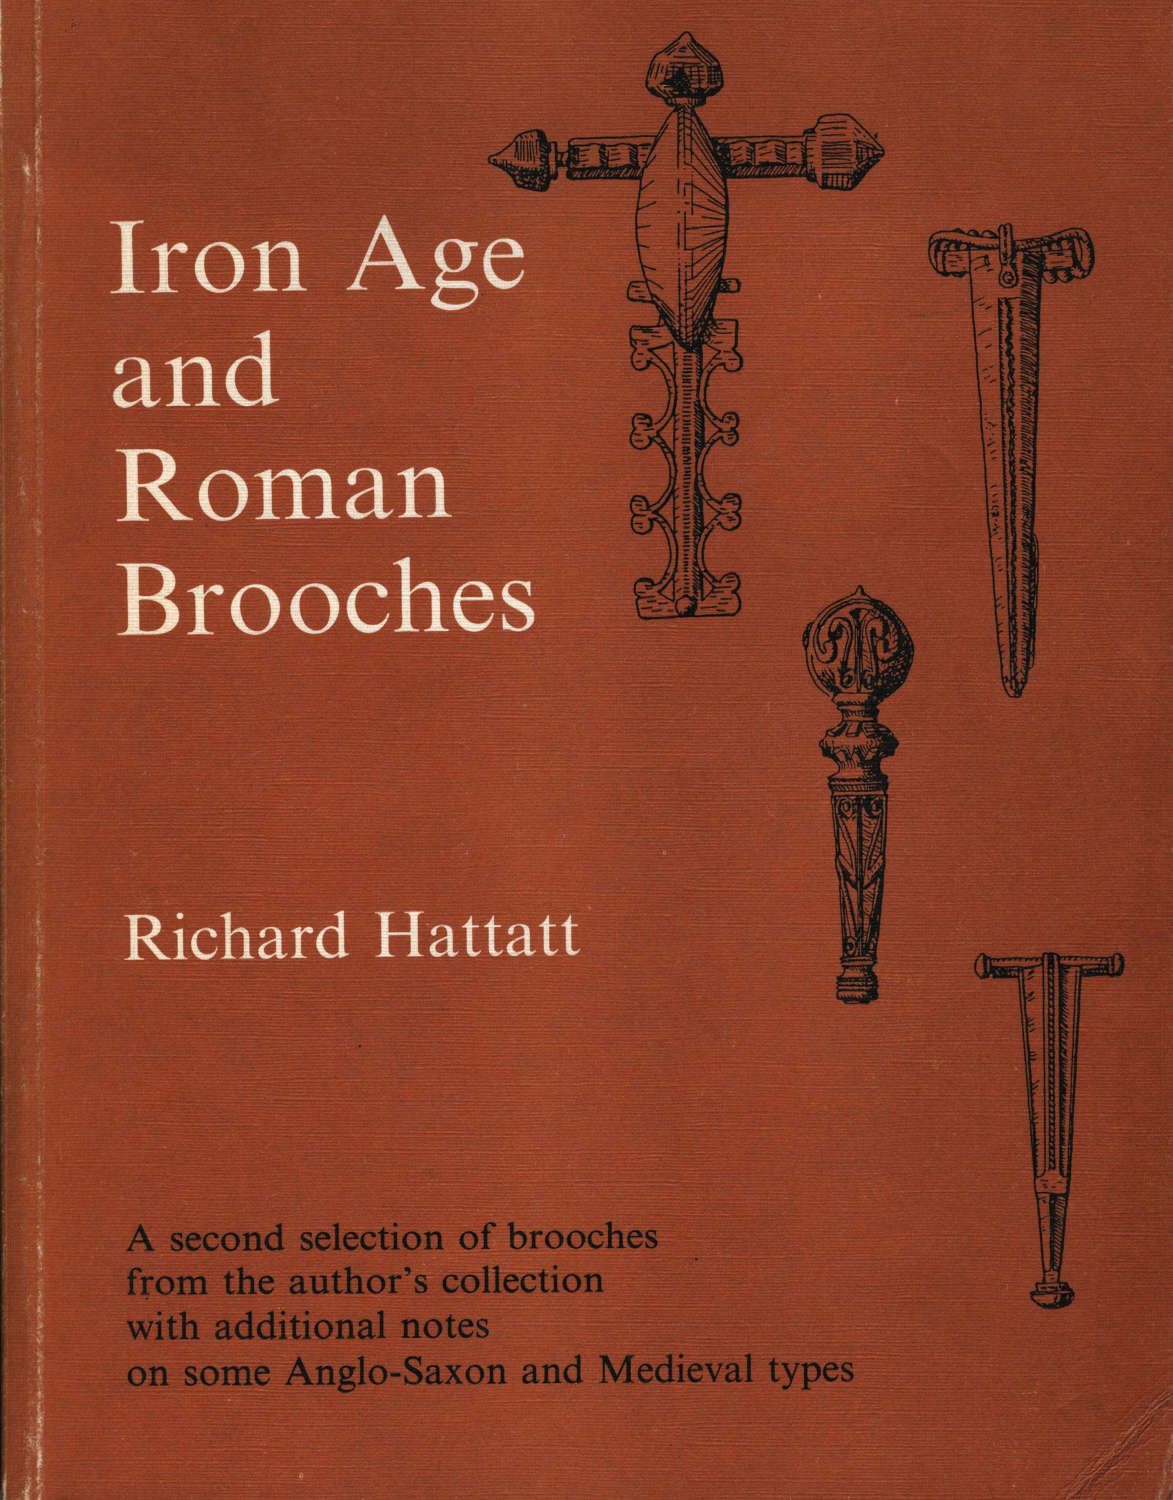 'Iron Age and Roman Brooches' by Richard Hattatt